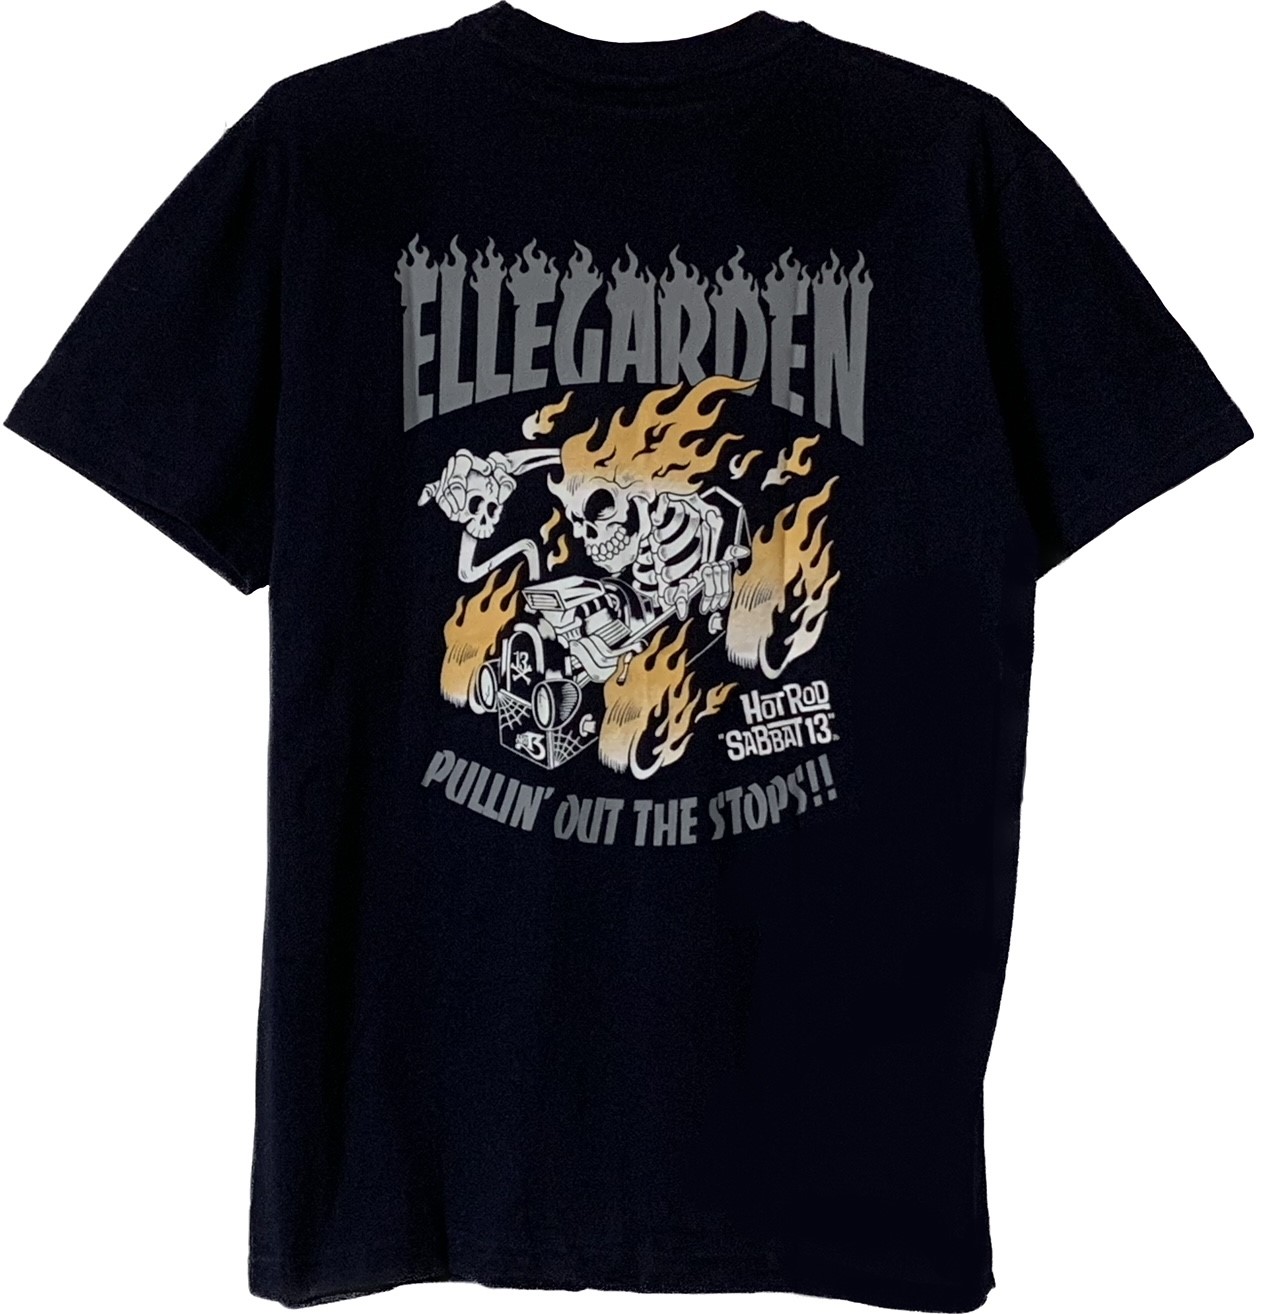 Ellegarden (엘르가든) - SABBAT13 티셔츠 [네이비 컬러/M사이즈]